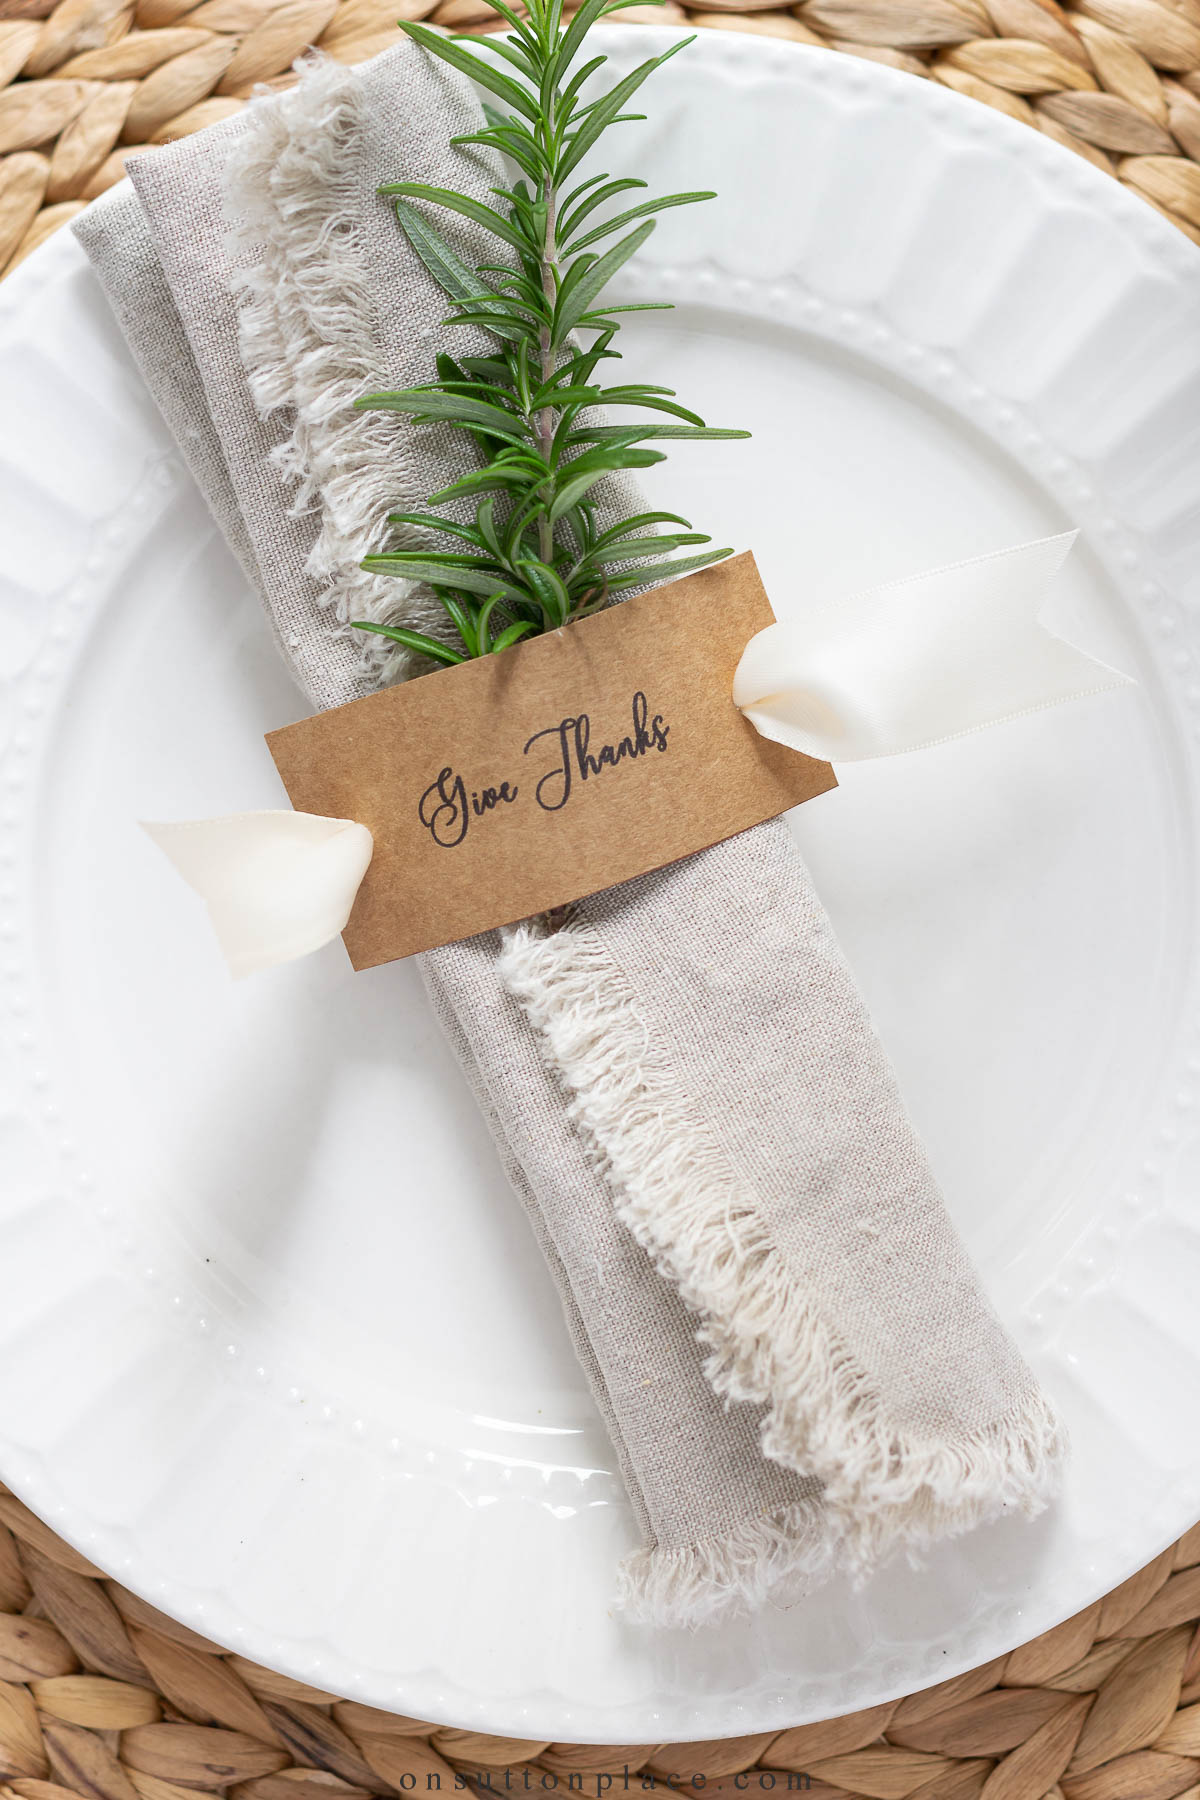 DIY linen napkins – By Hand London